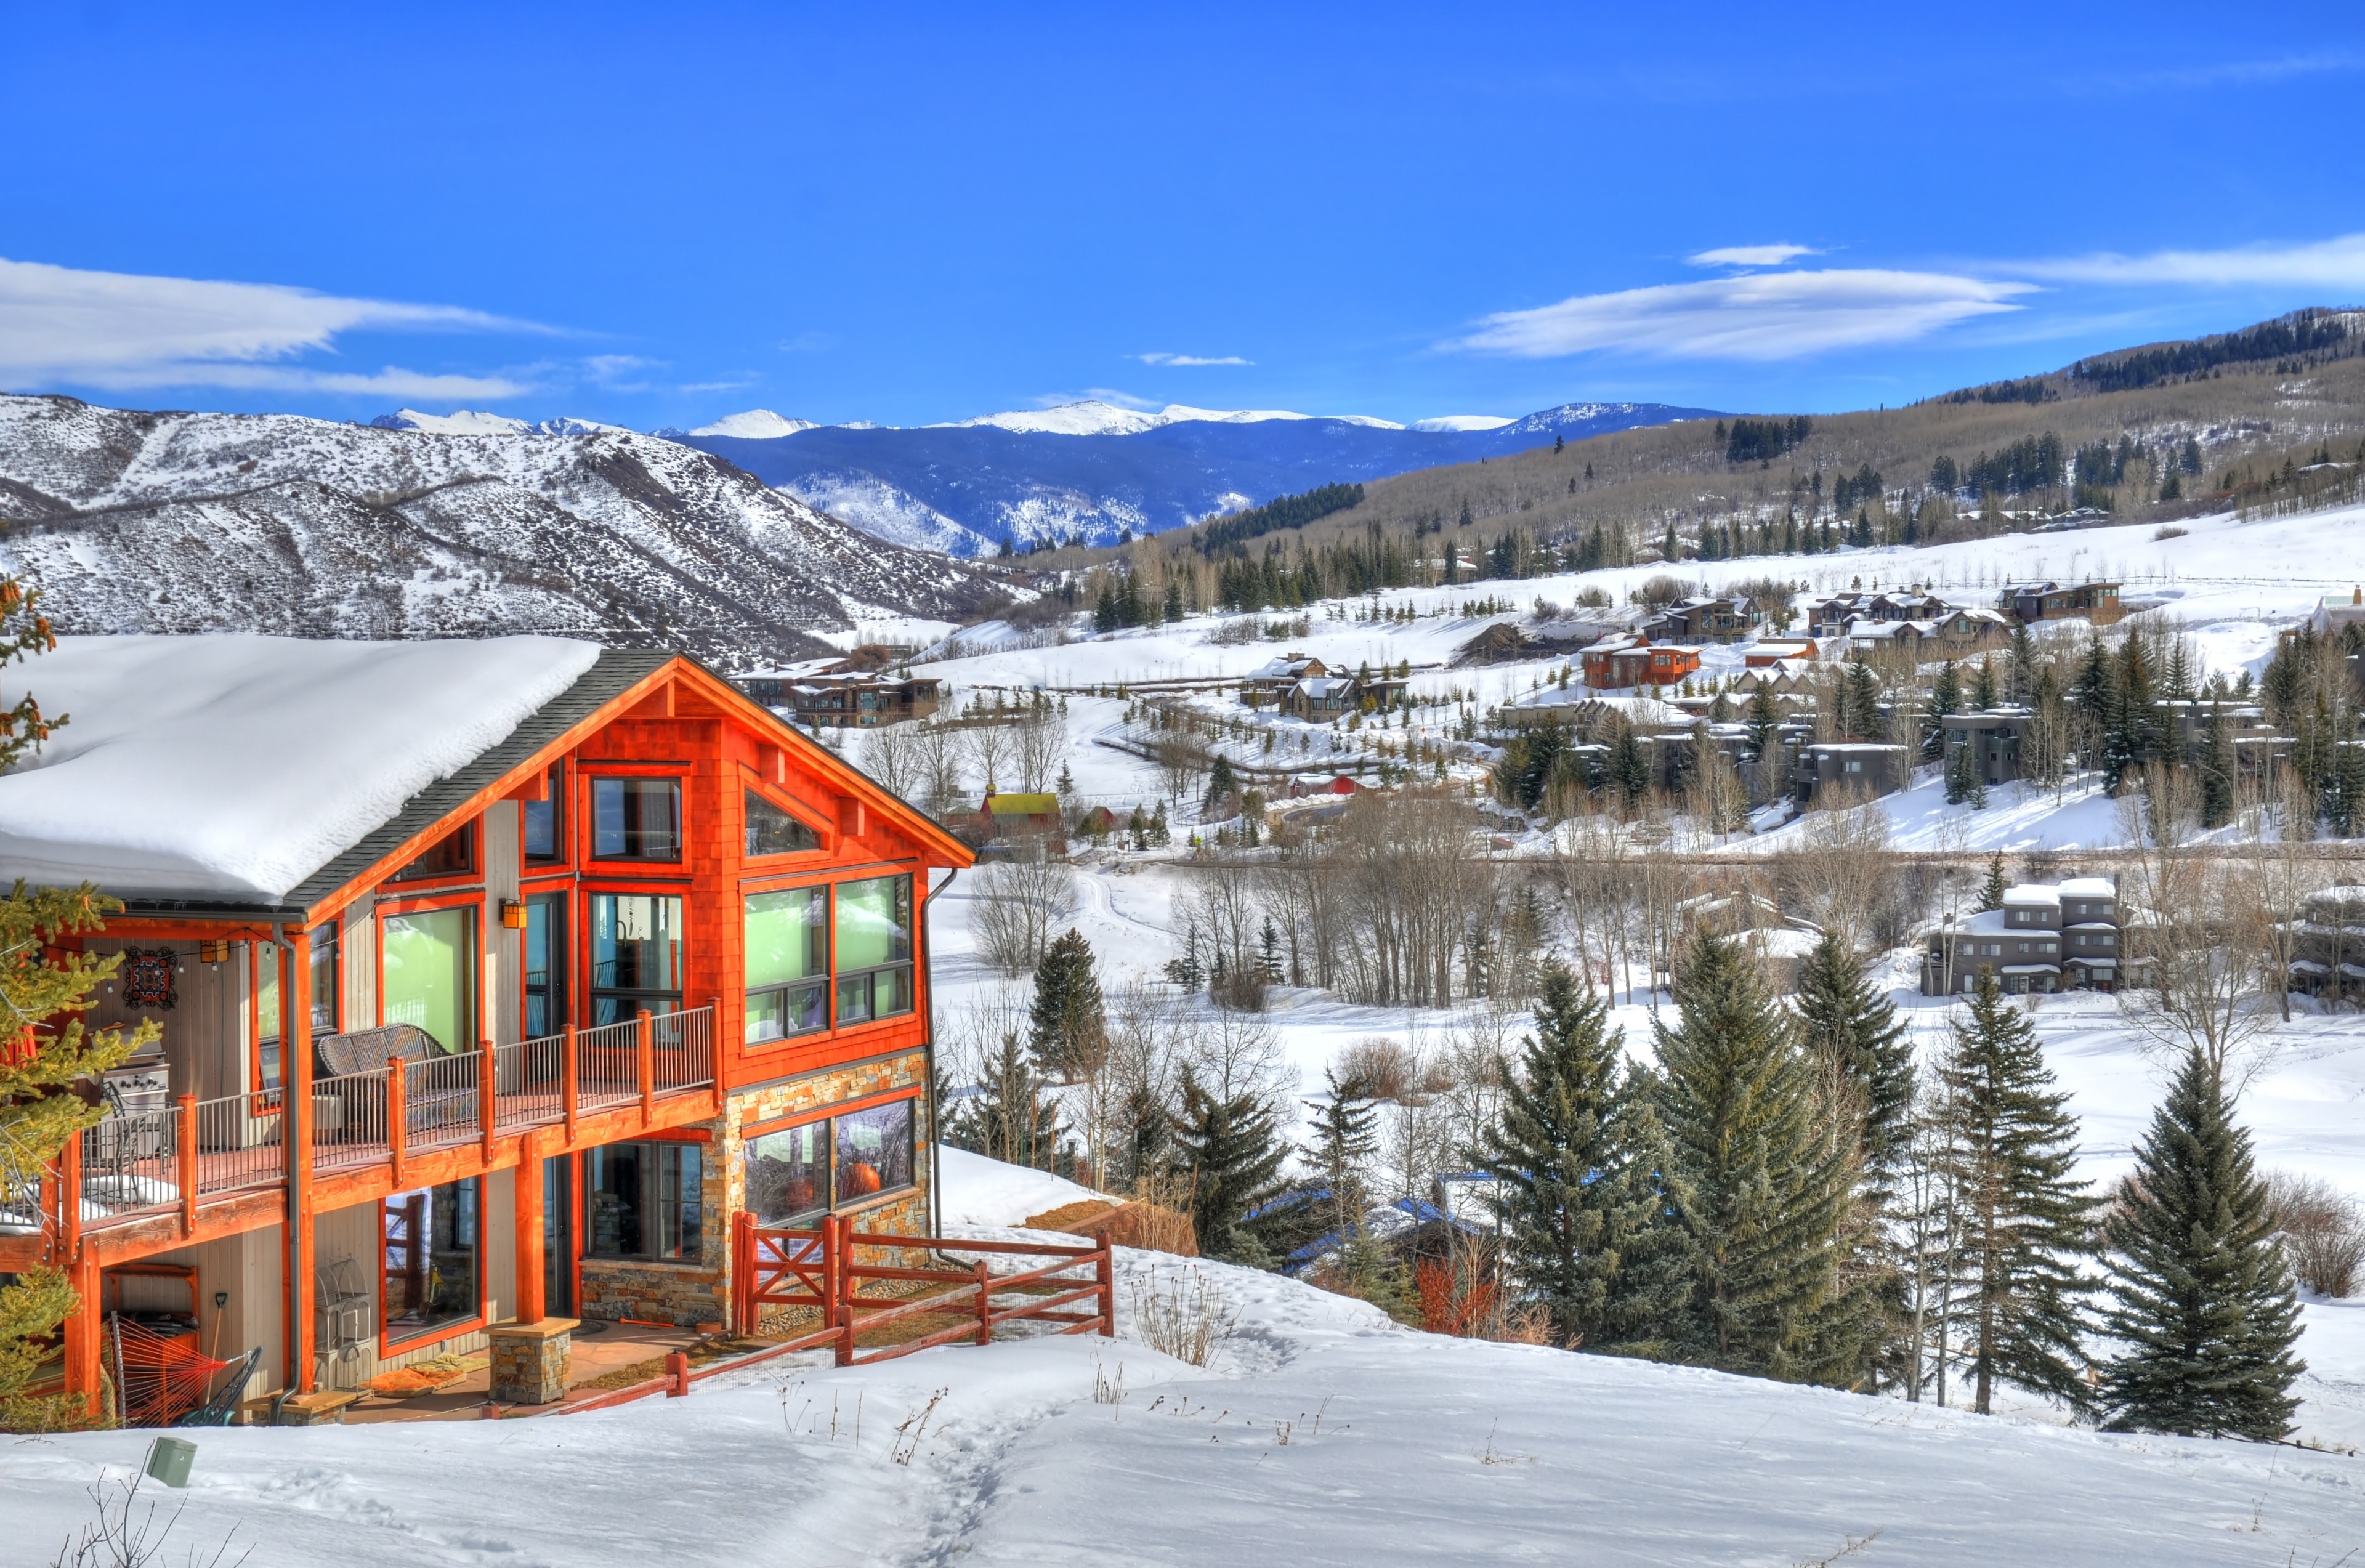 Vacation Homes near Aspen Mountain, Downtown Aspen: House Rentals & More